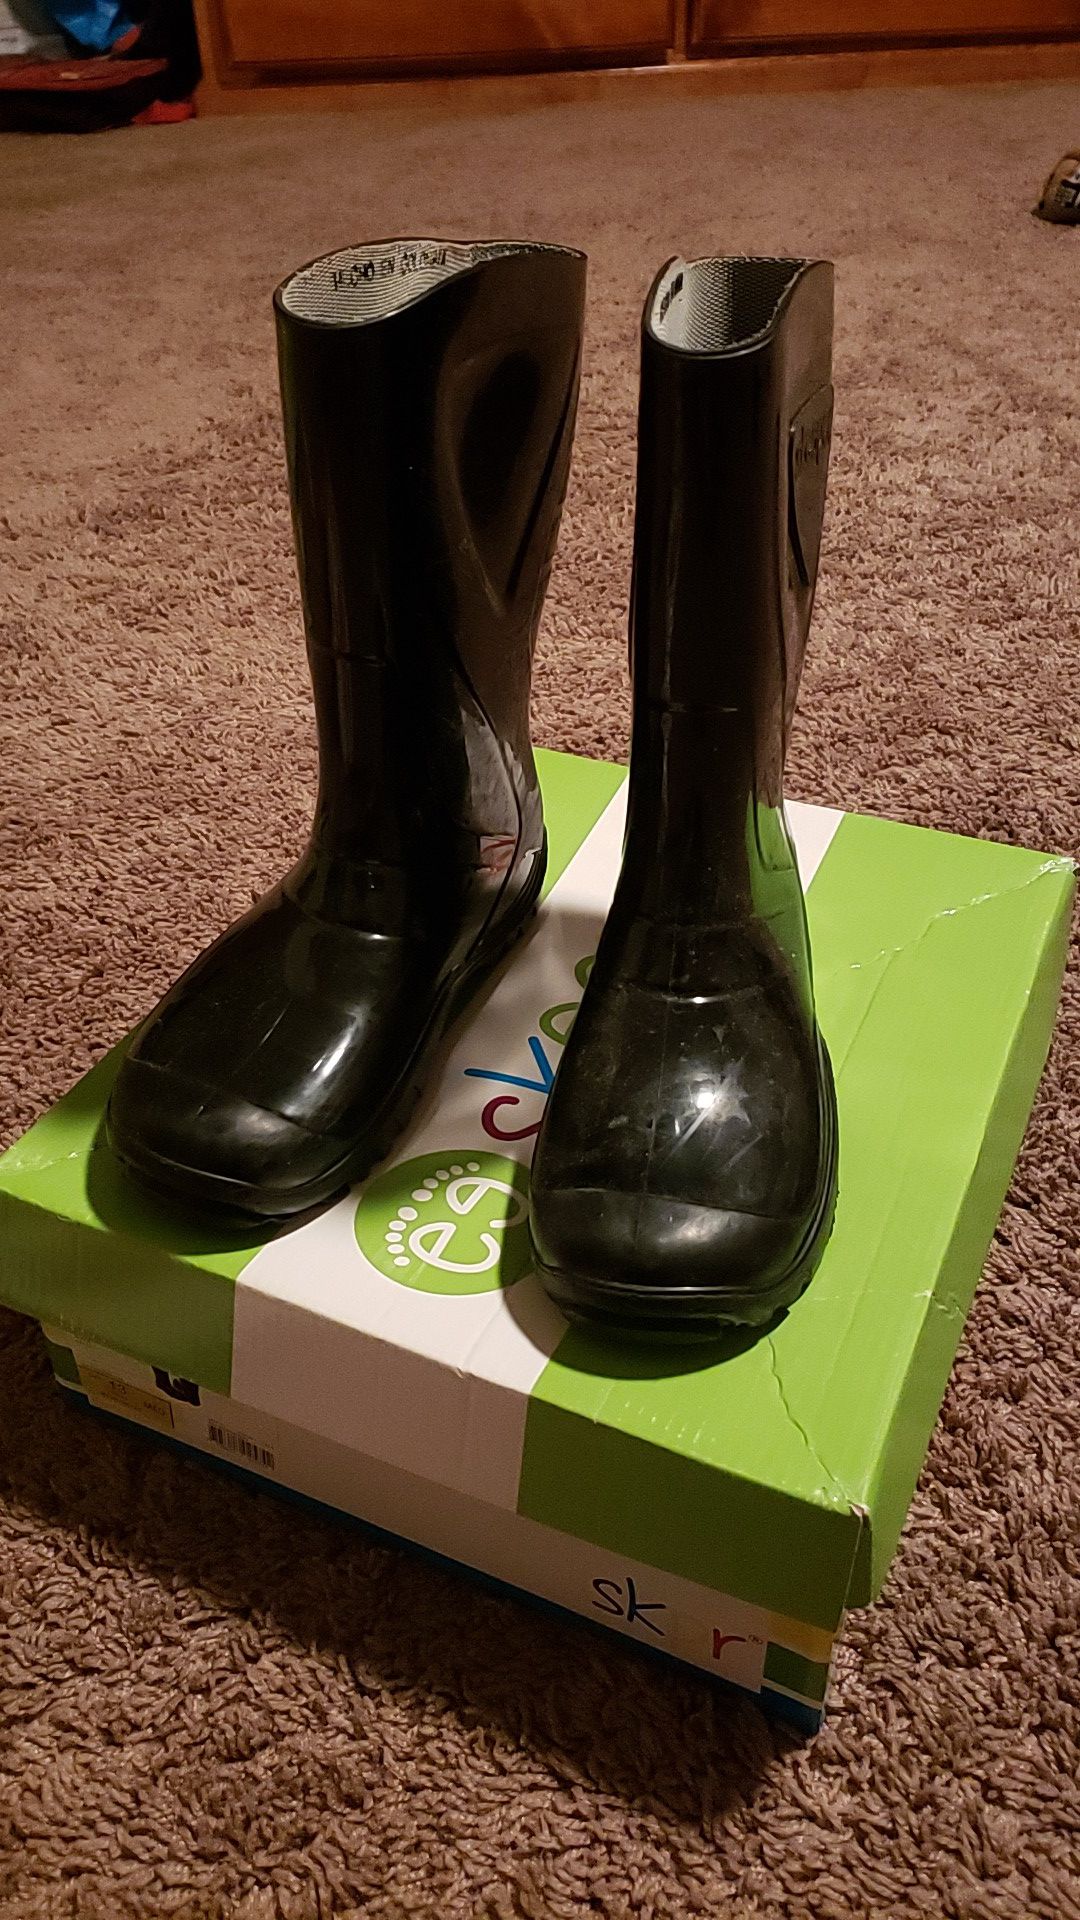 Black size 13 toddler/little kid rain boots